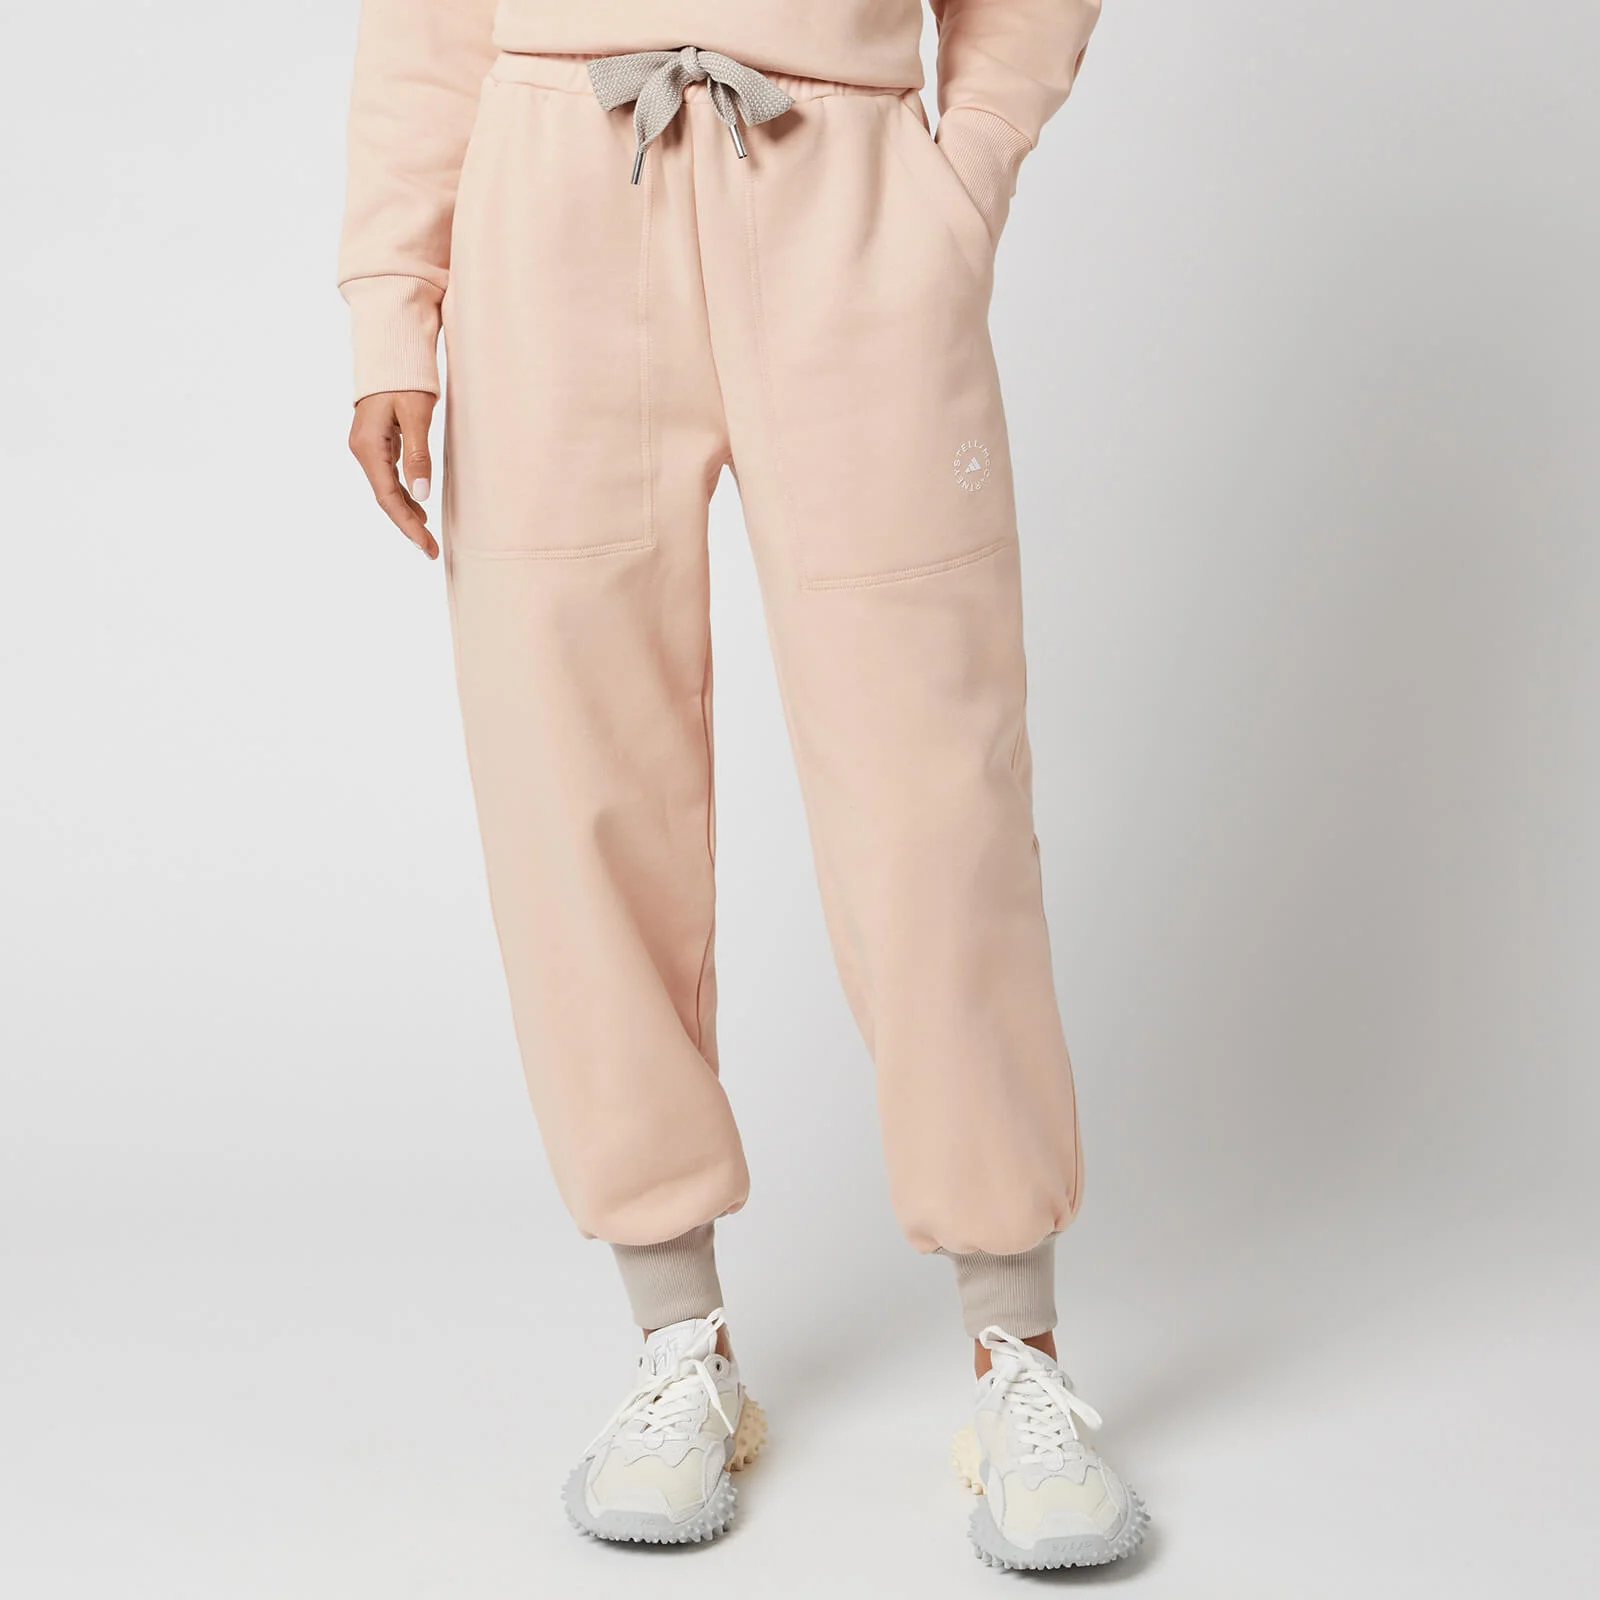 adidas by Stella McCartney Women's Sweatpants - Soft Powder/Light Brown Image 1